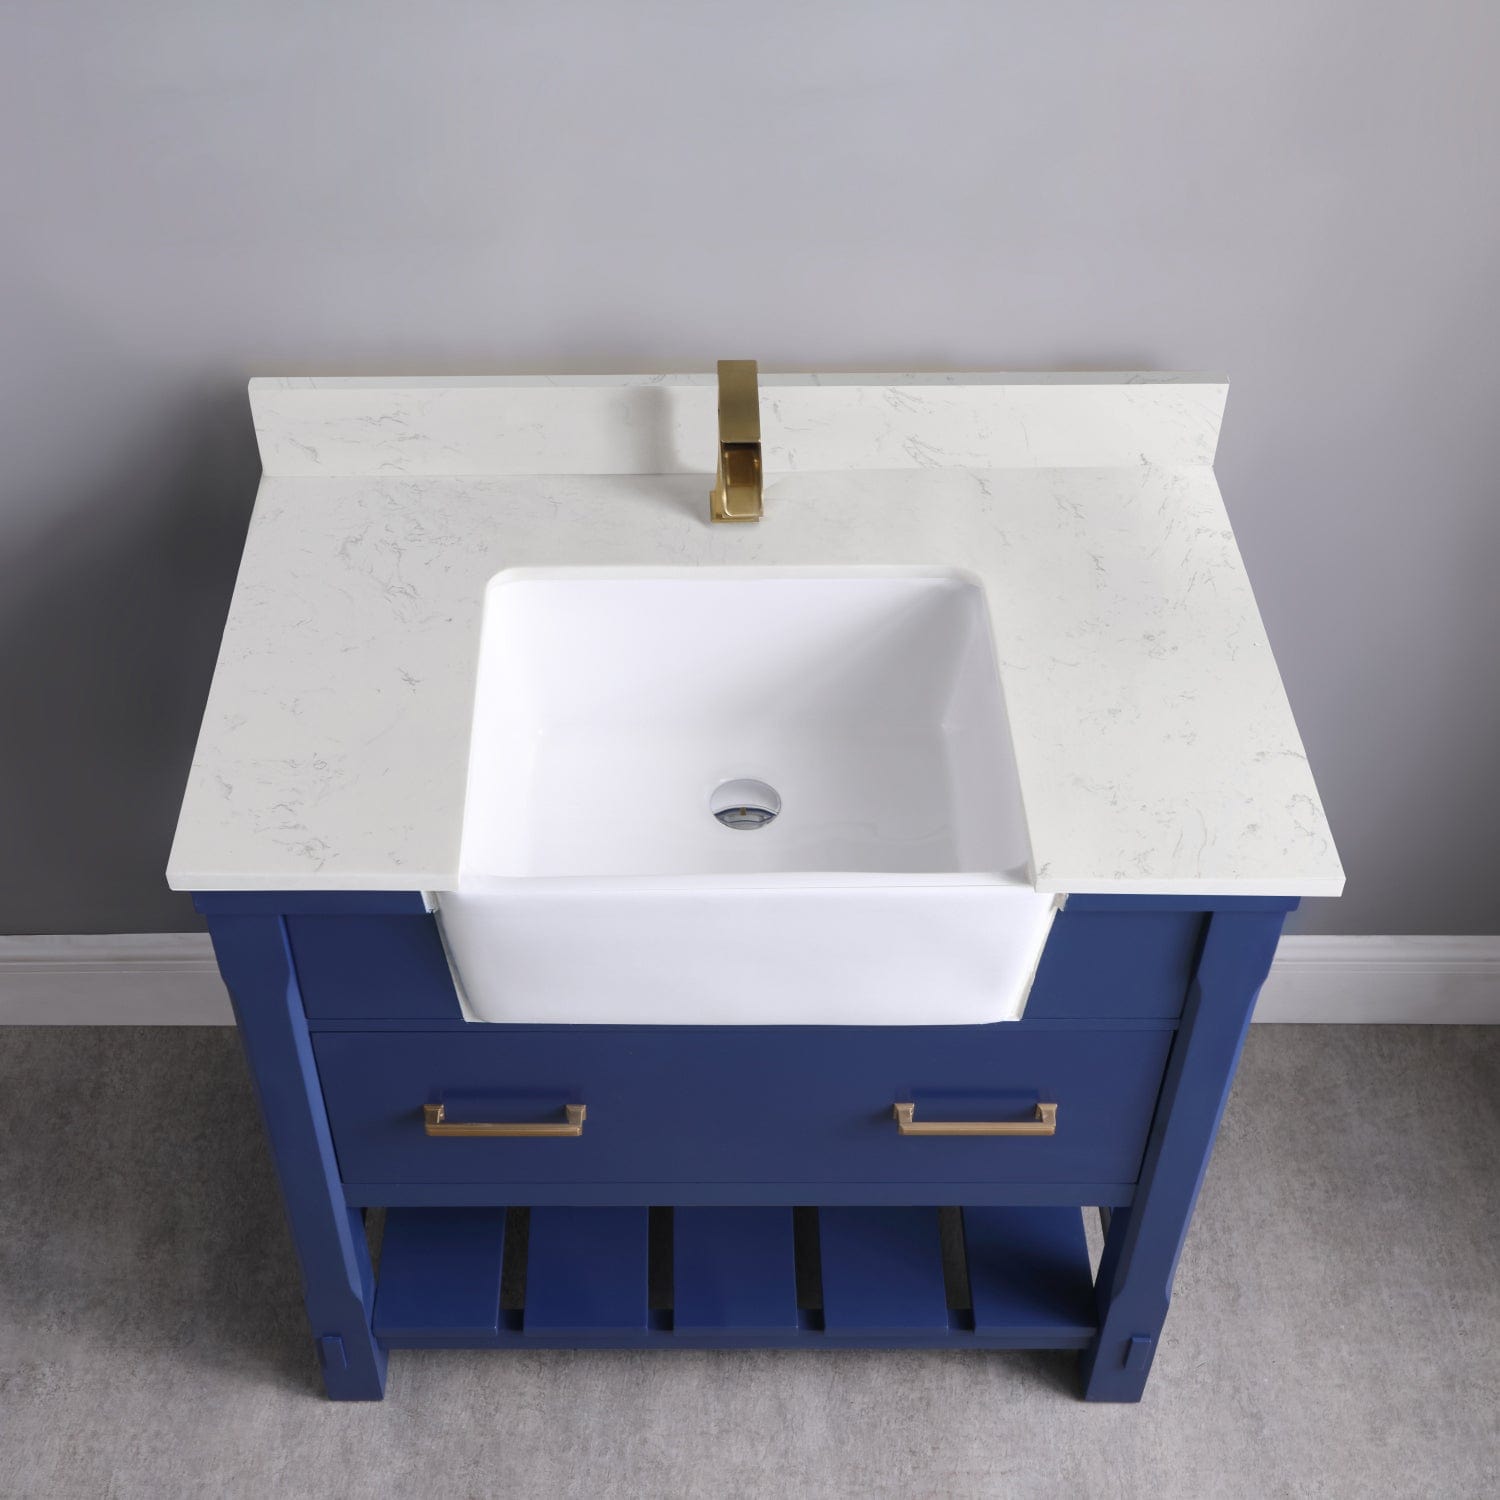 Altair Georgia 36" Single Bathroom Vanity Set in Jewelry Blue and Composite Carrara White Stone Top with White Farmhouse Basin without Mirror 537036-JB-AW-NM - Molaix631112970563Vanity537036-JB-AW-NM